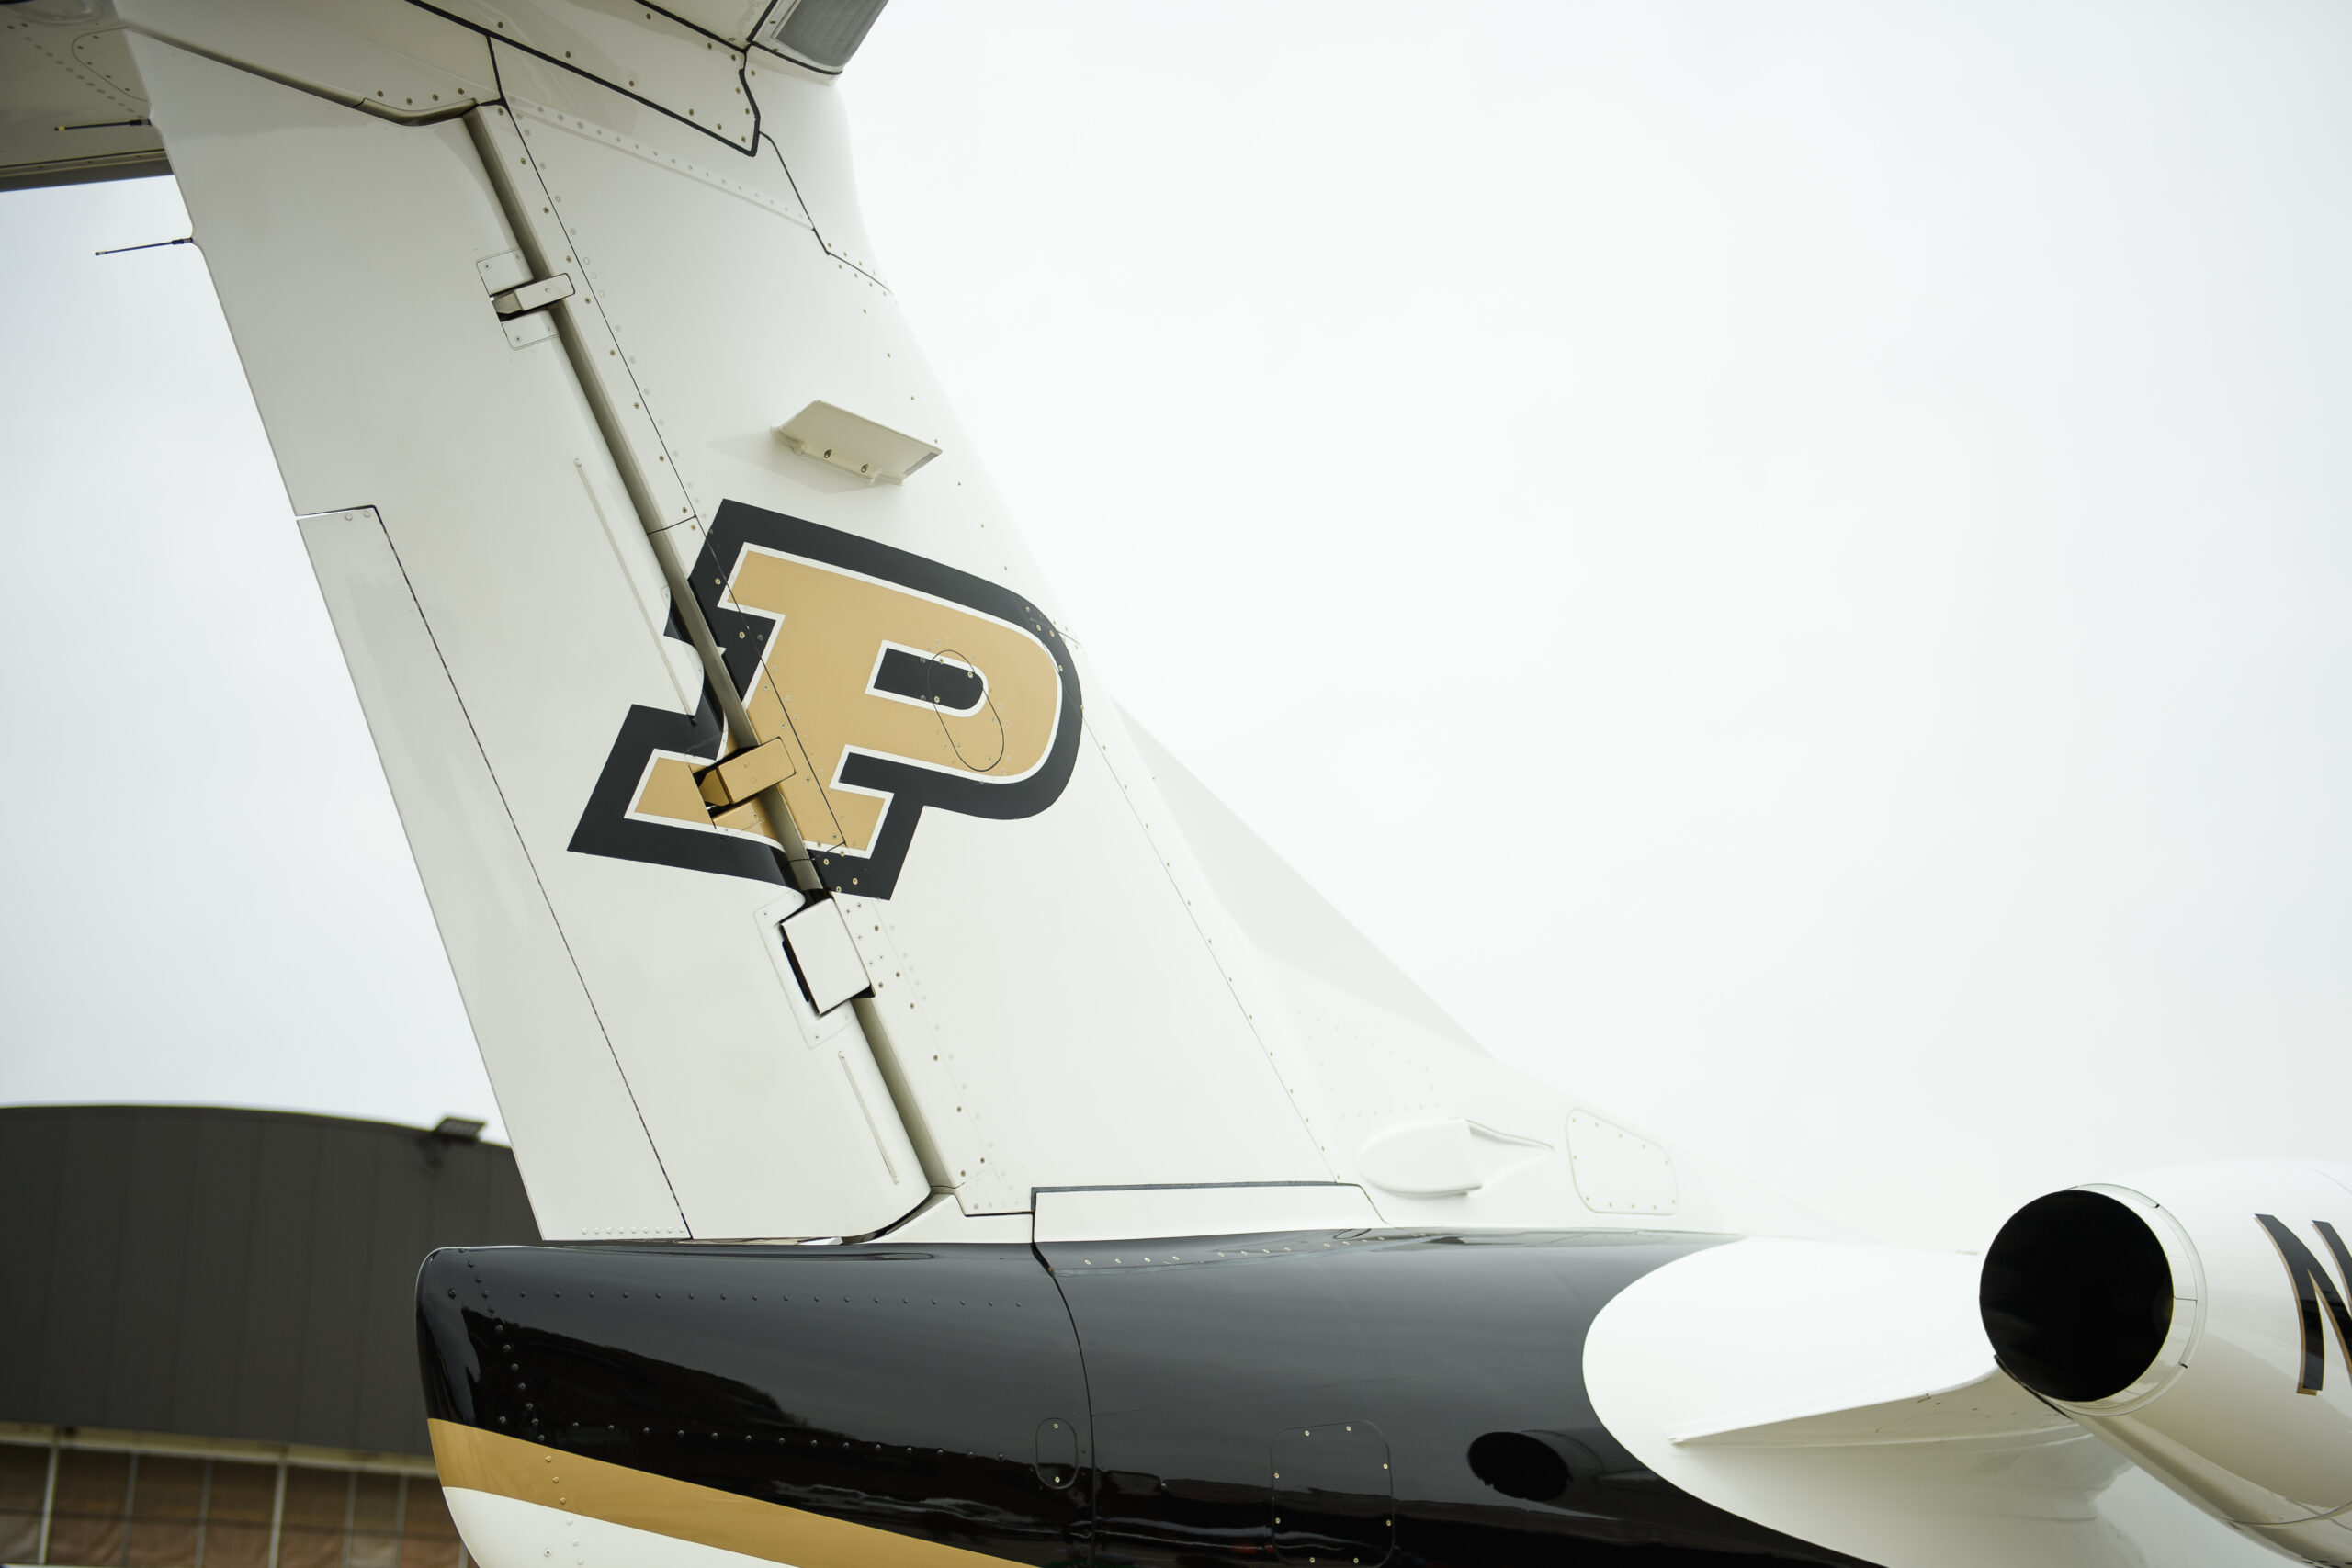 Purdue University motion P logo on airplane tail.